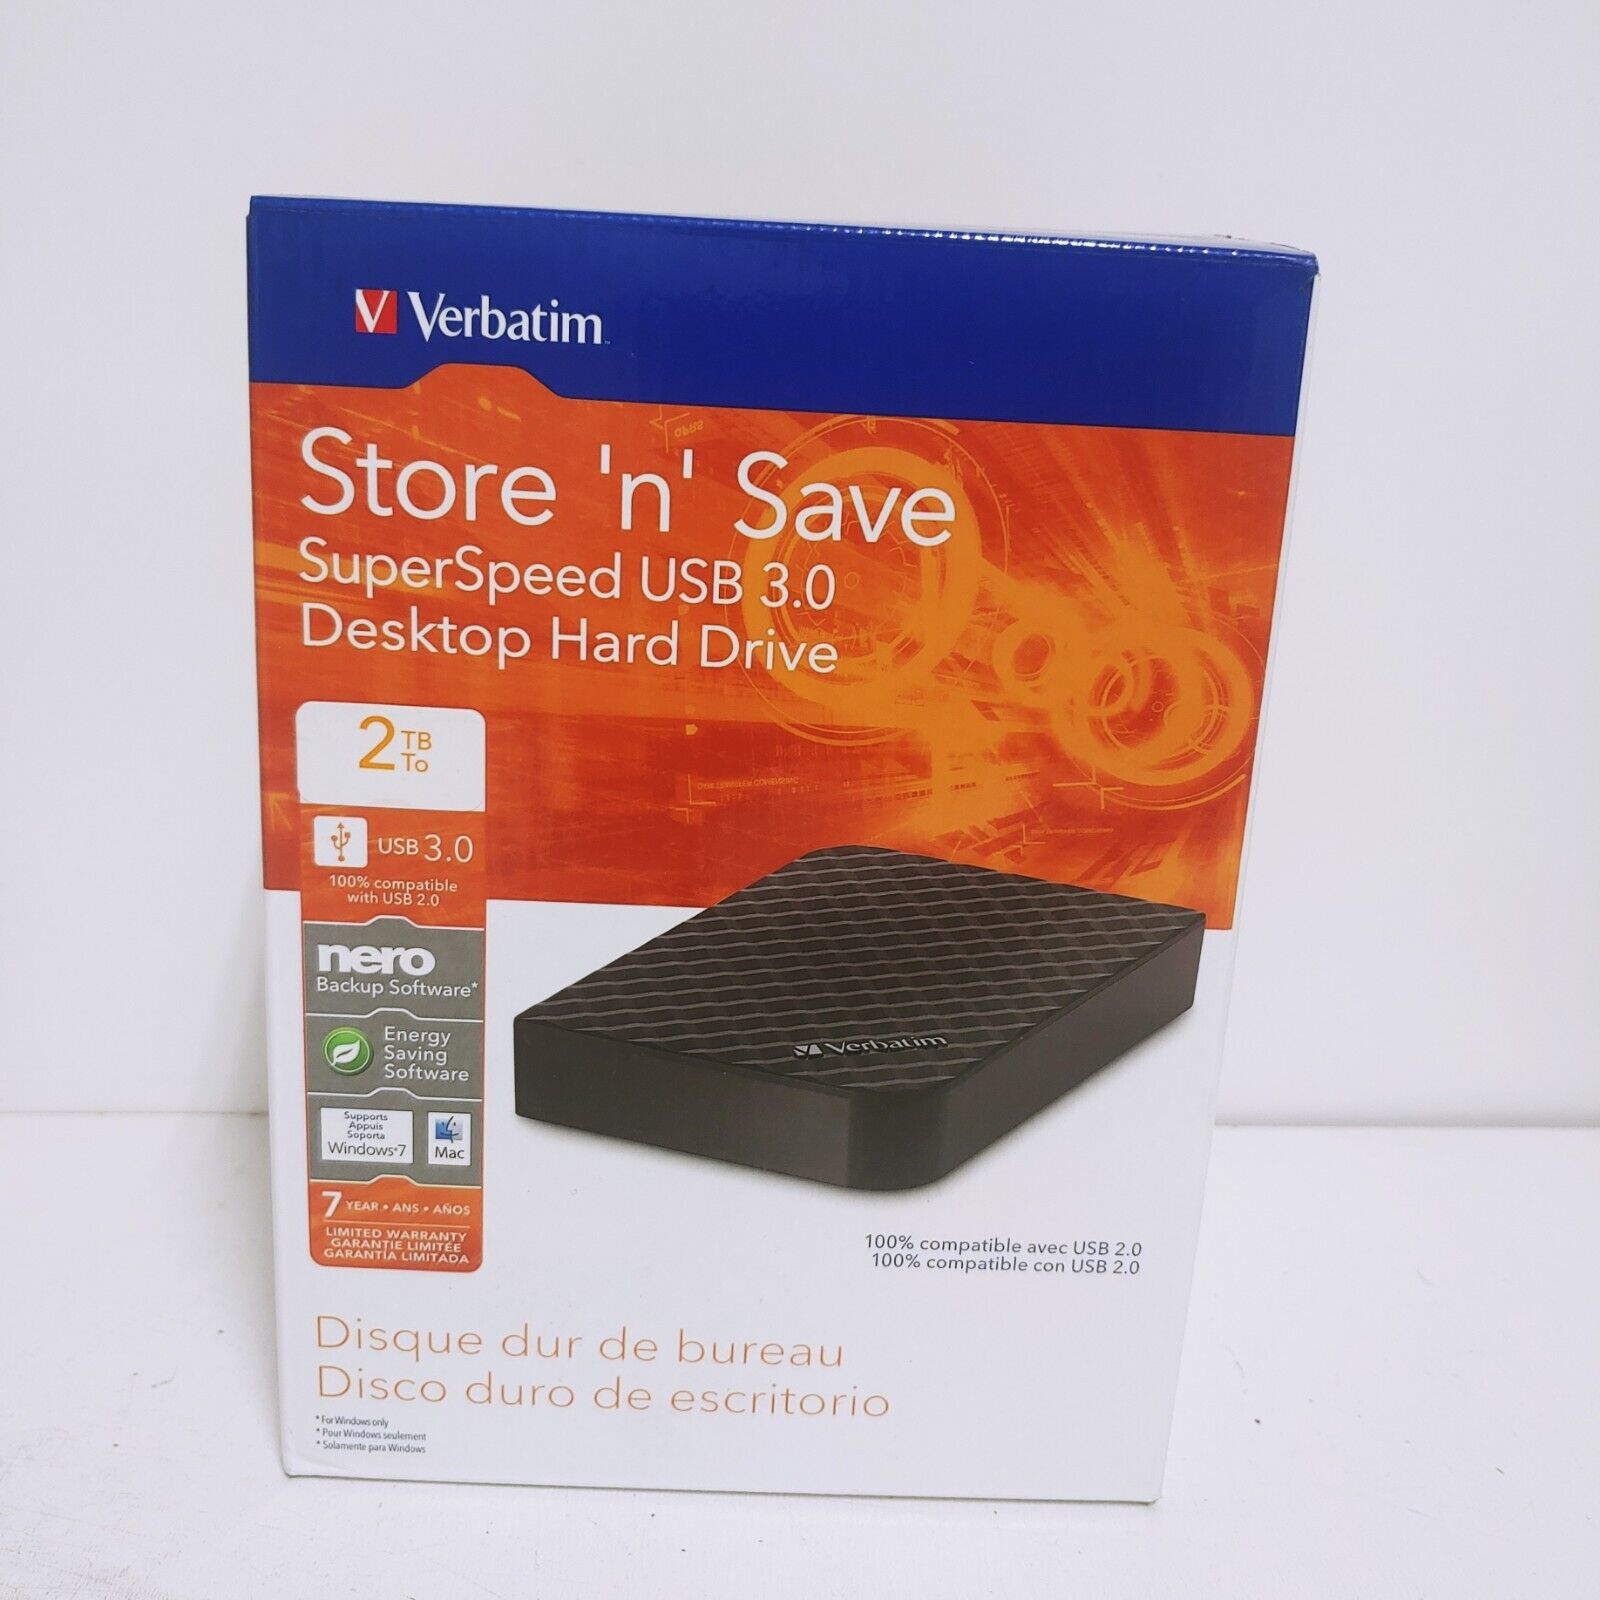 Verbatim 2TB Store 'n' Save Desktop Hard Drive, USB 3.0 - Diamond Black